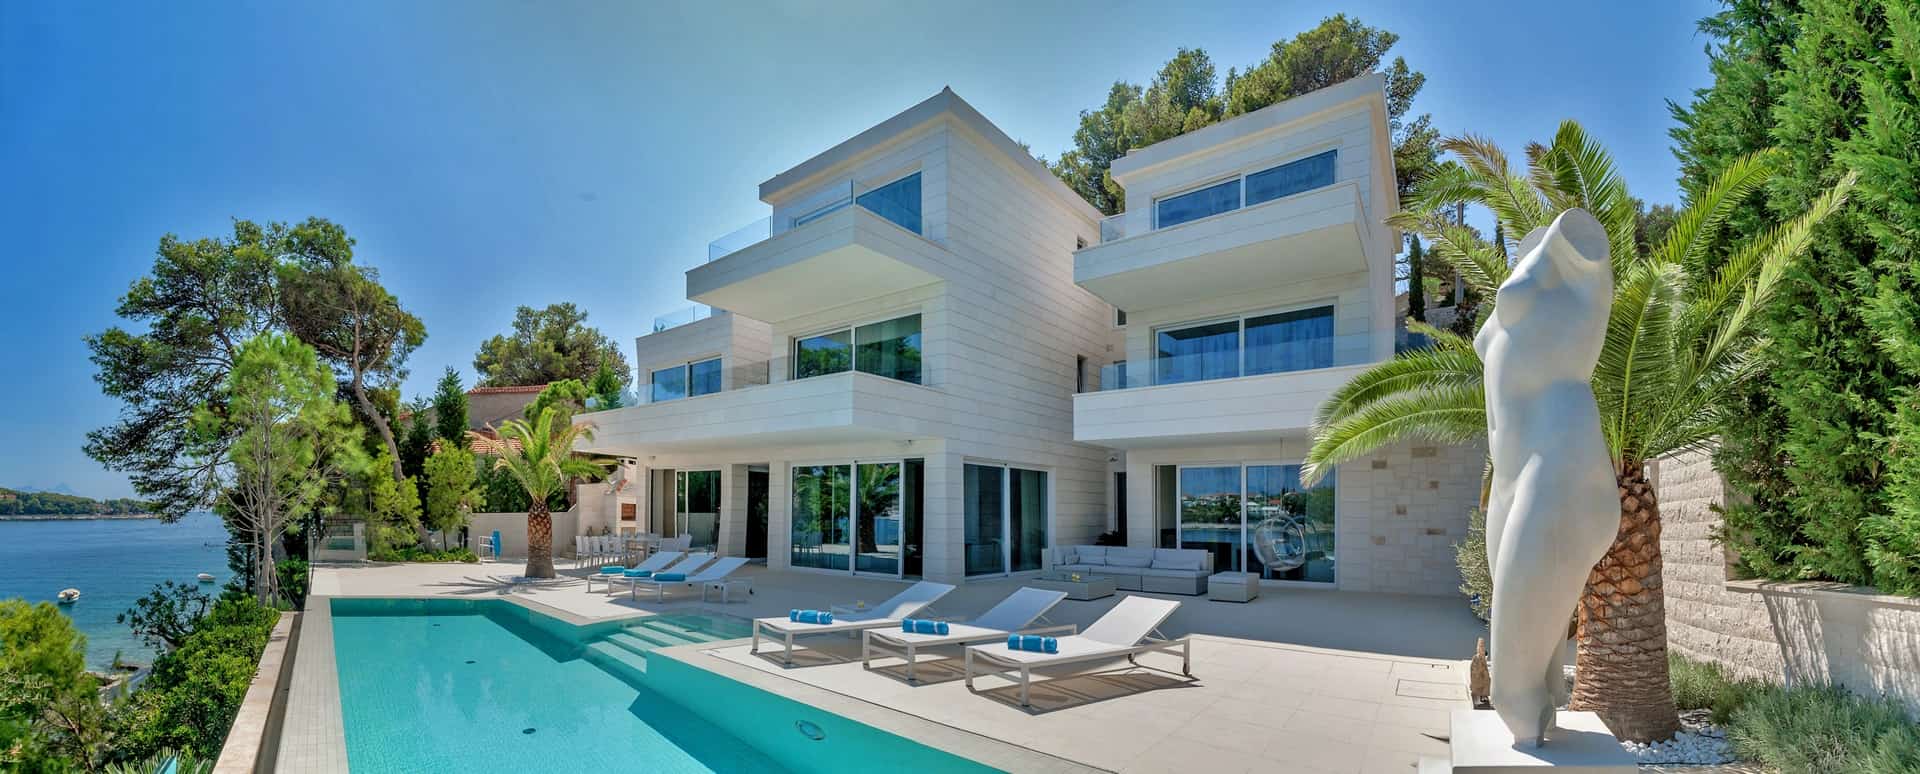 Amazing villa with infinity pool